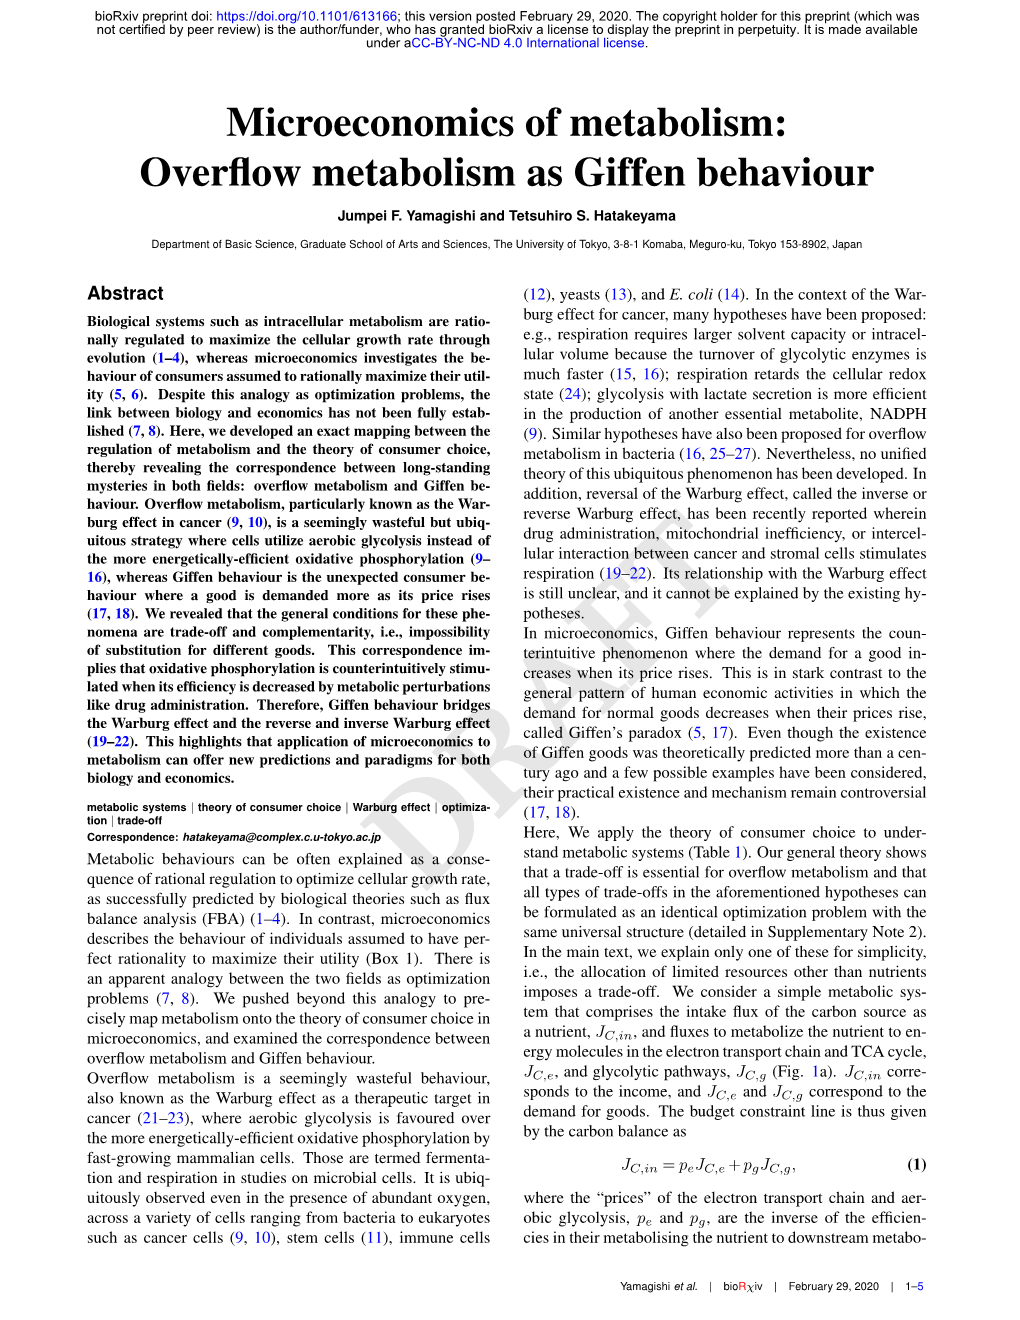 Microeconomics of Metabolism: Overflow Metabolism As Giffen